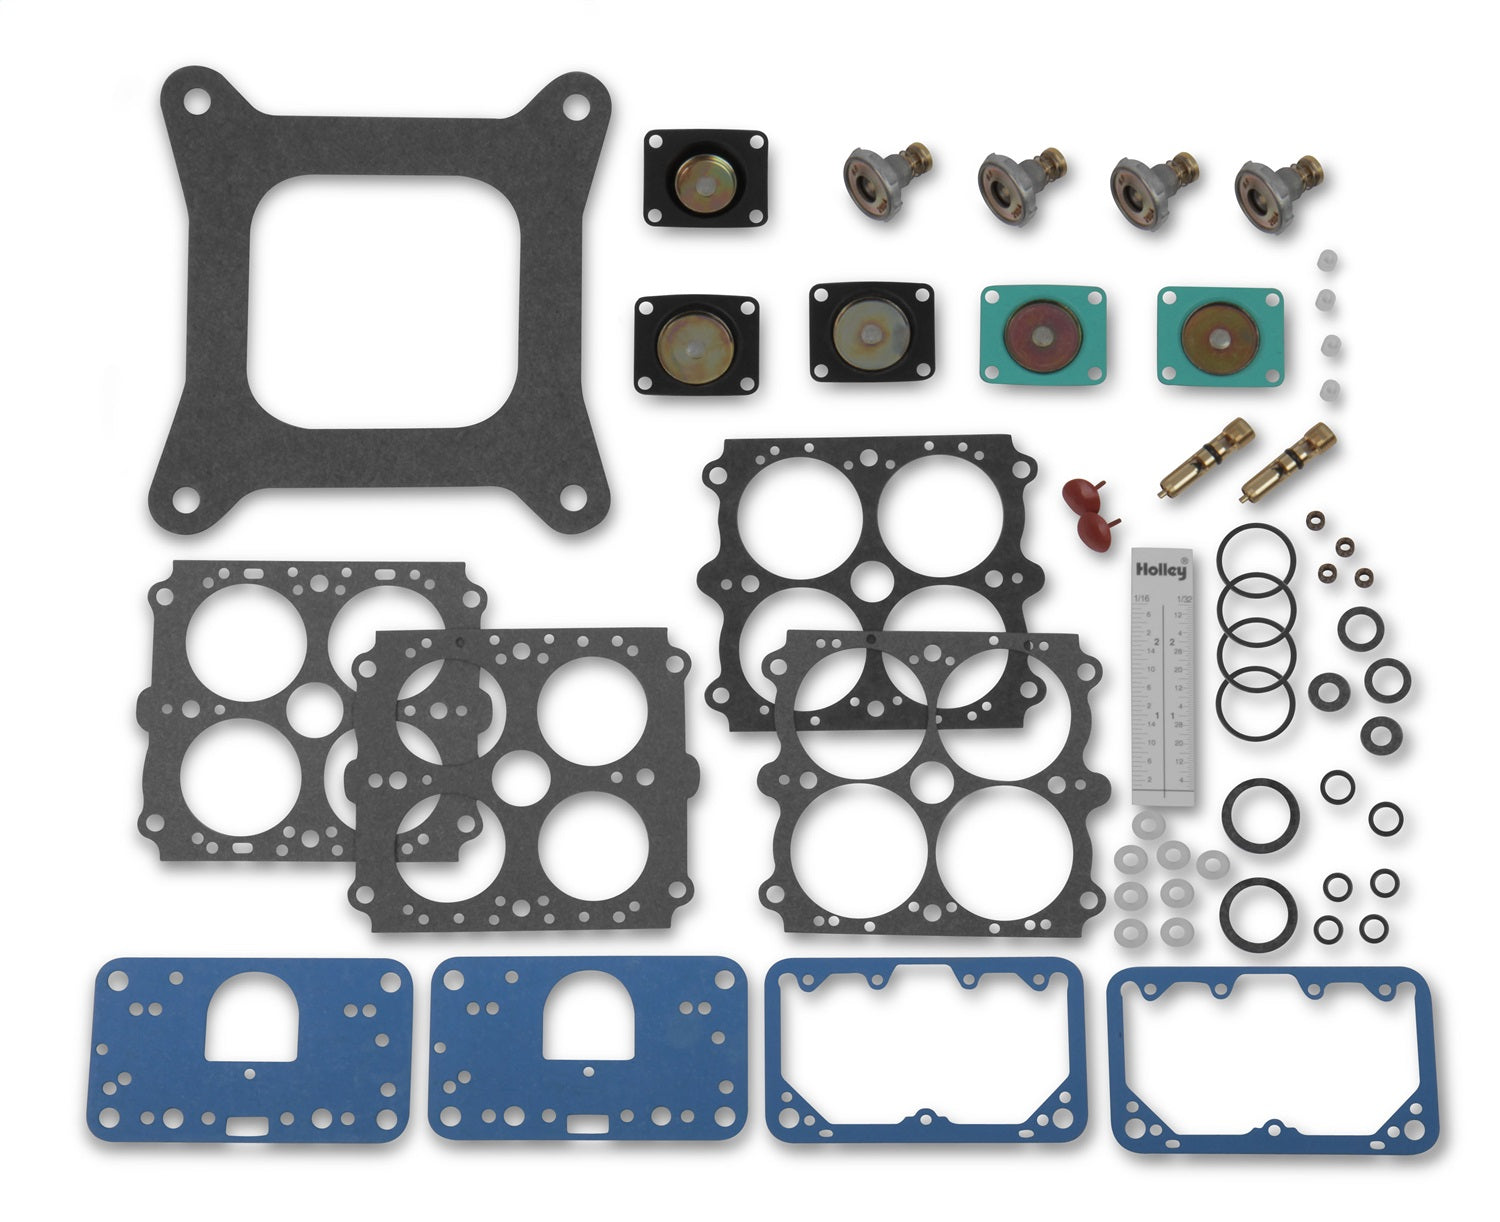 Holley Performance 37-1546 Fast Kit Carburetor Rebuild Kit